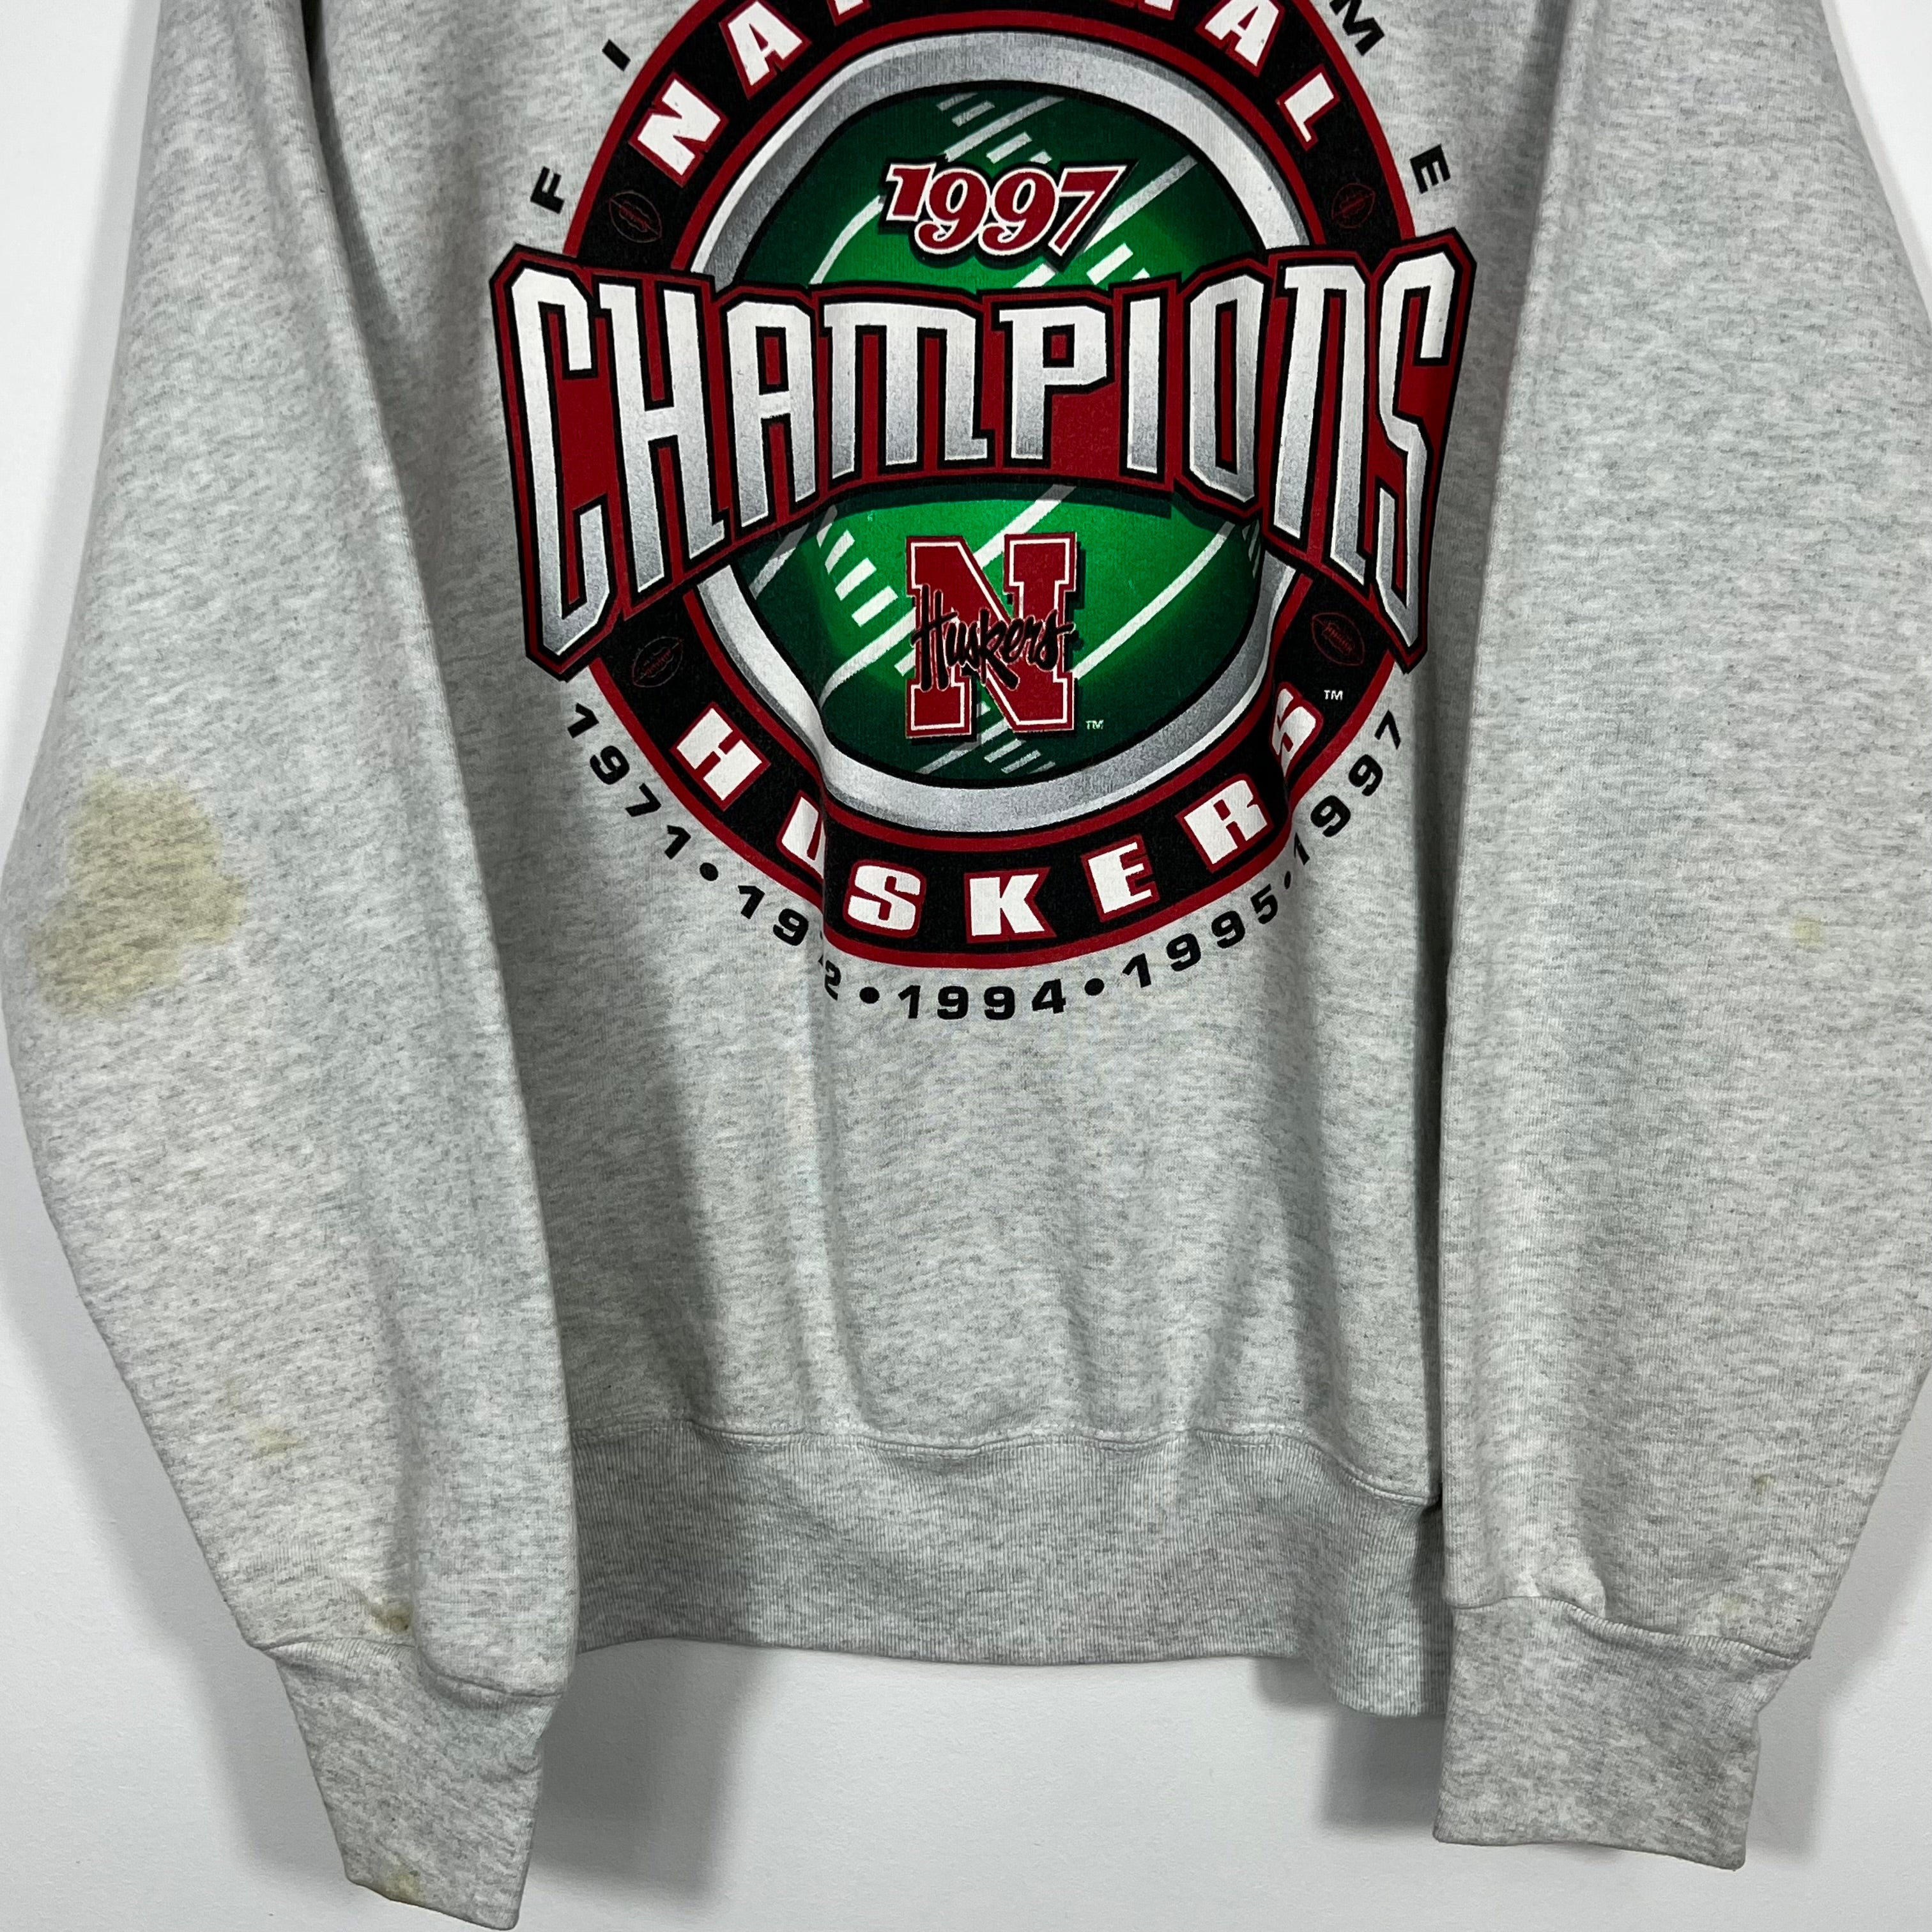 Vintage 1997 Nebraska Champions Sweatshirt - Men's Large